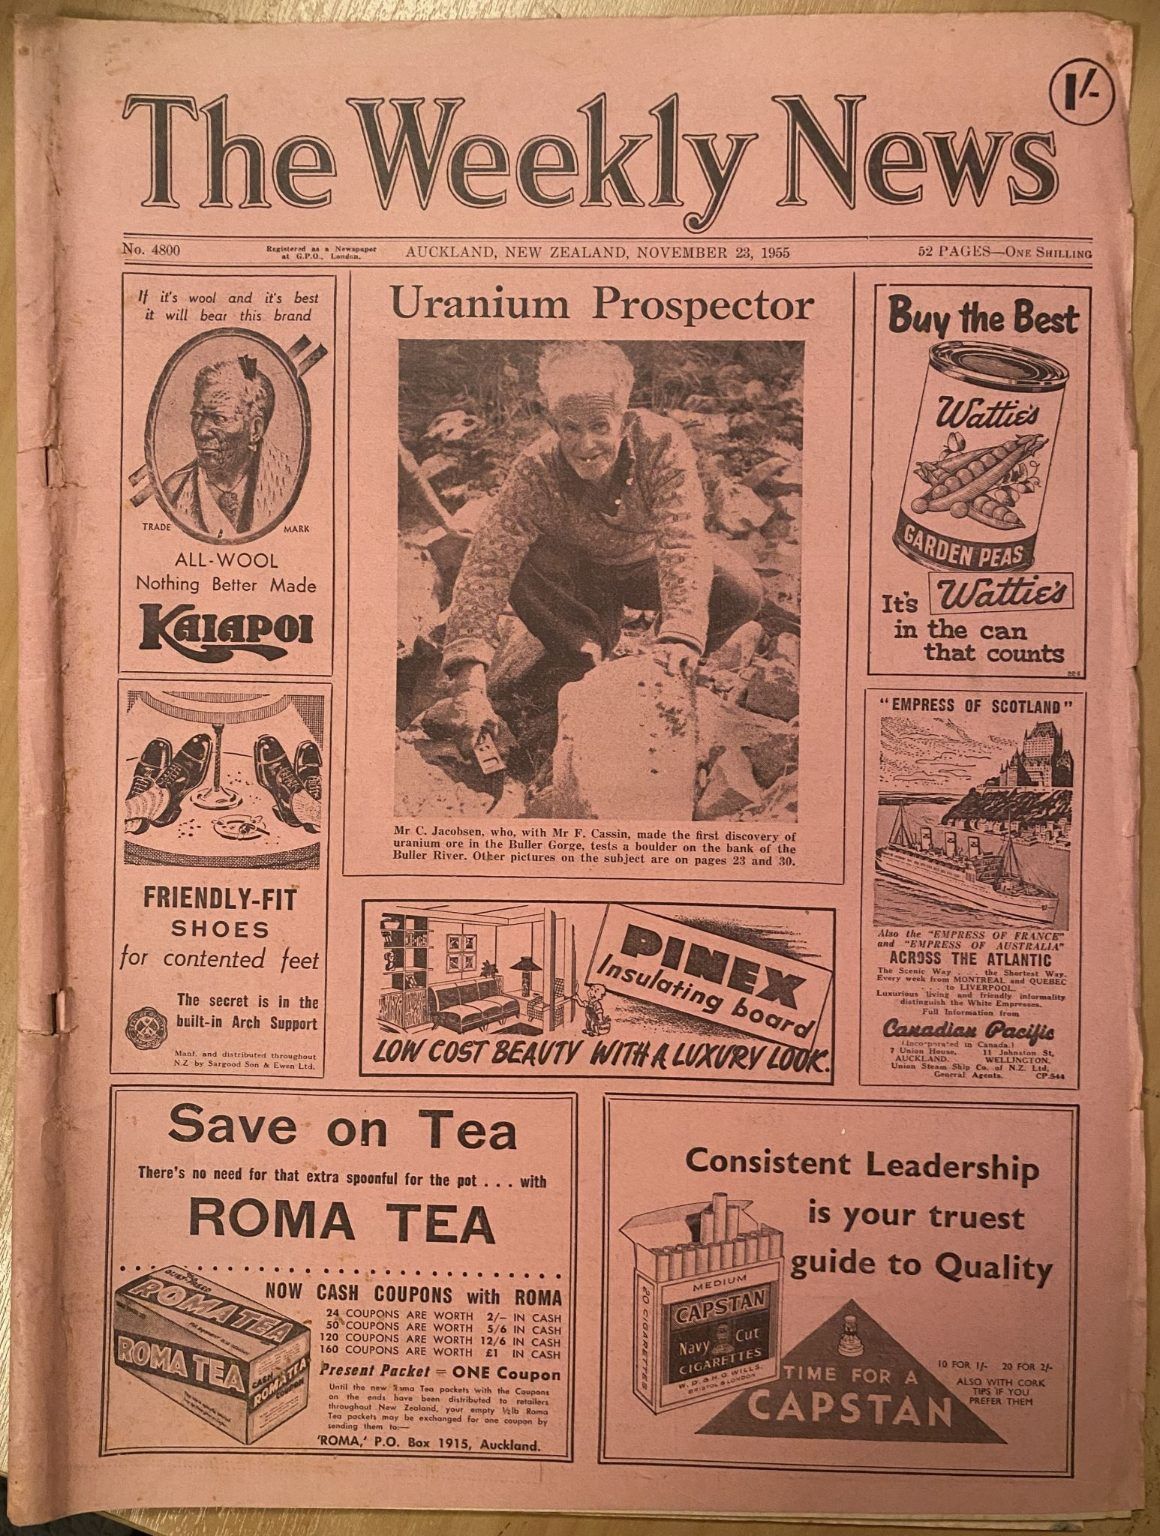 OLD NEWSPAPER: The Weekly News - No. 4800, 23 November 1955